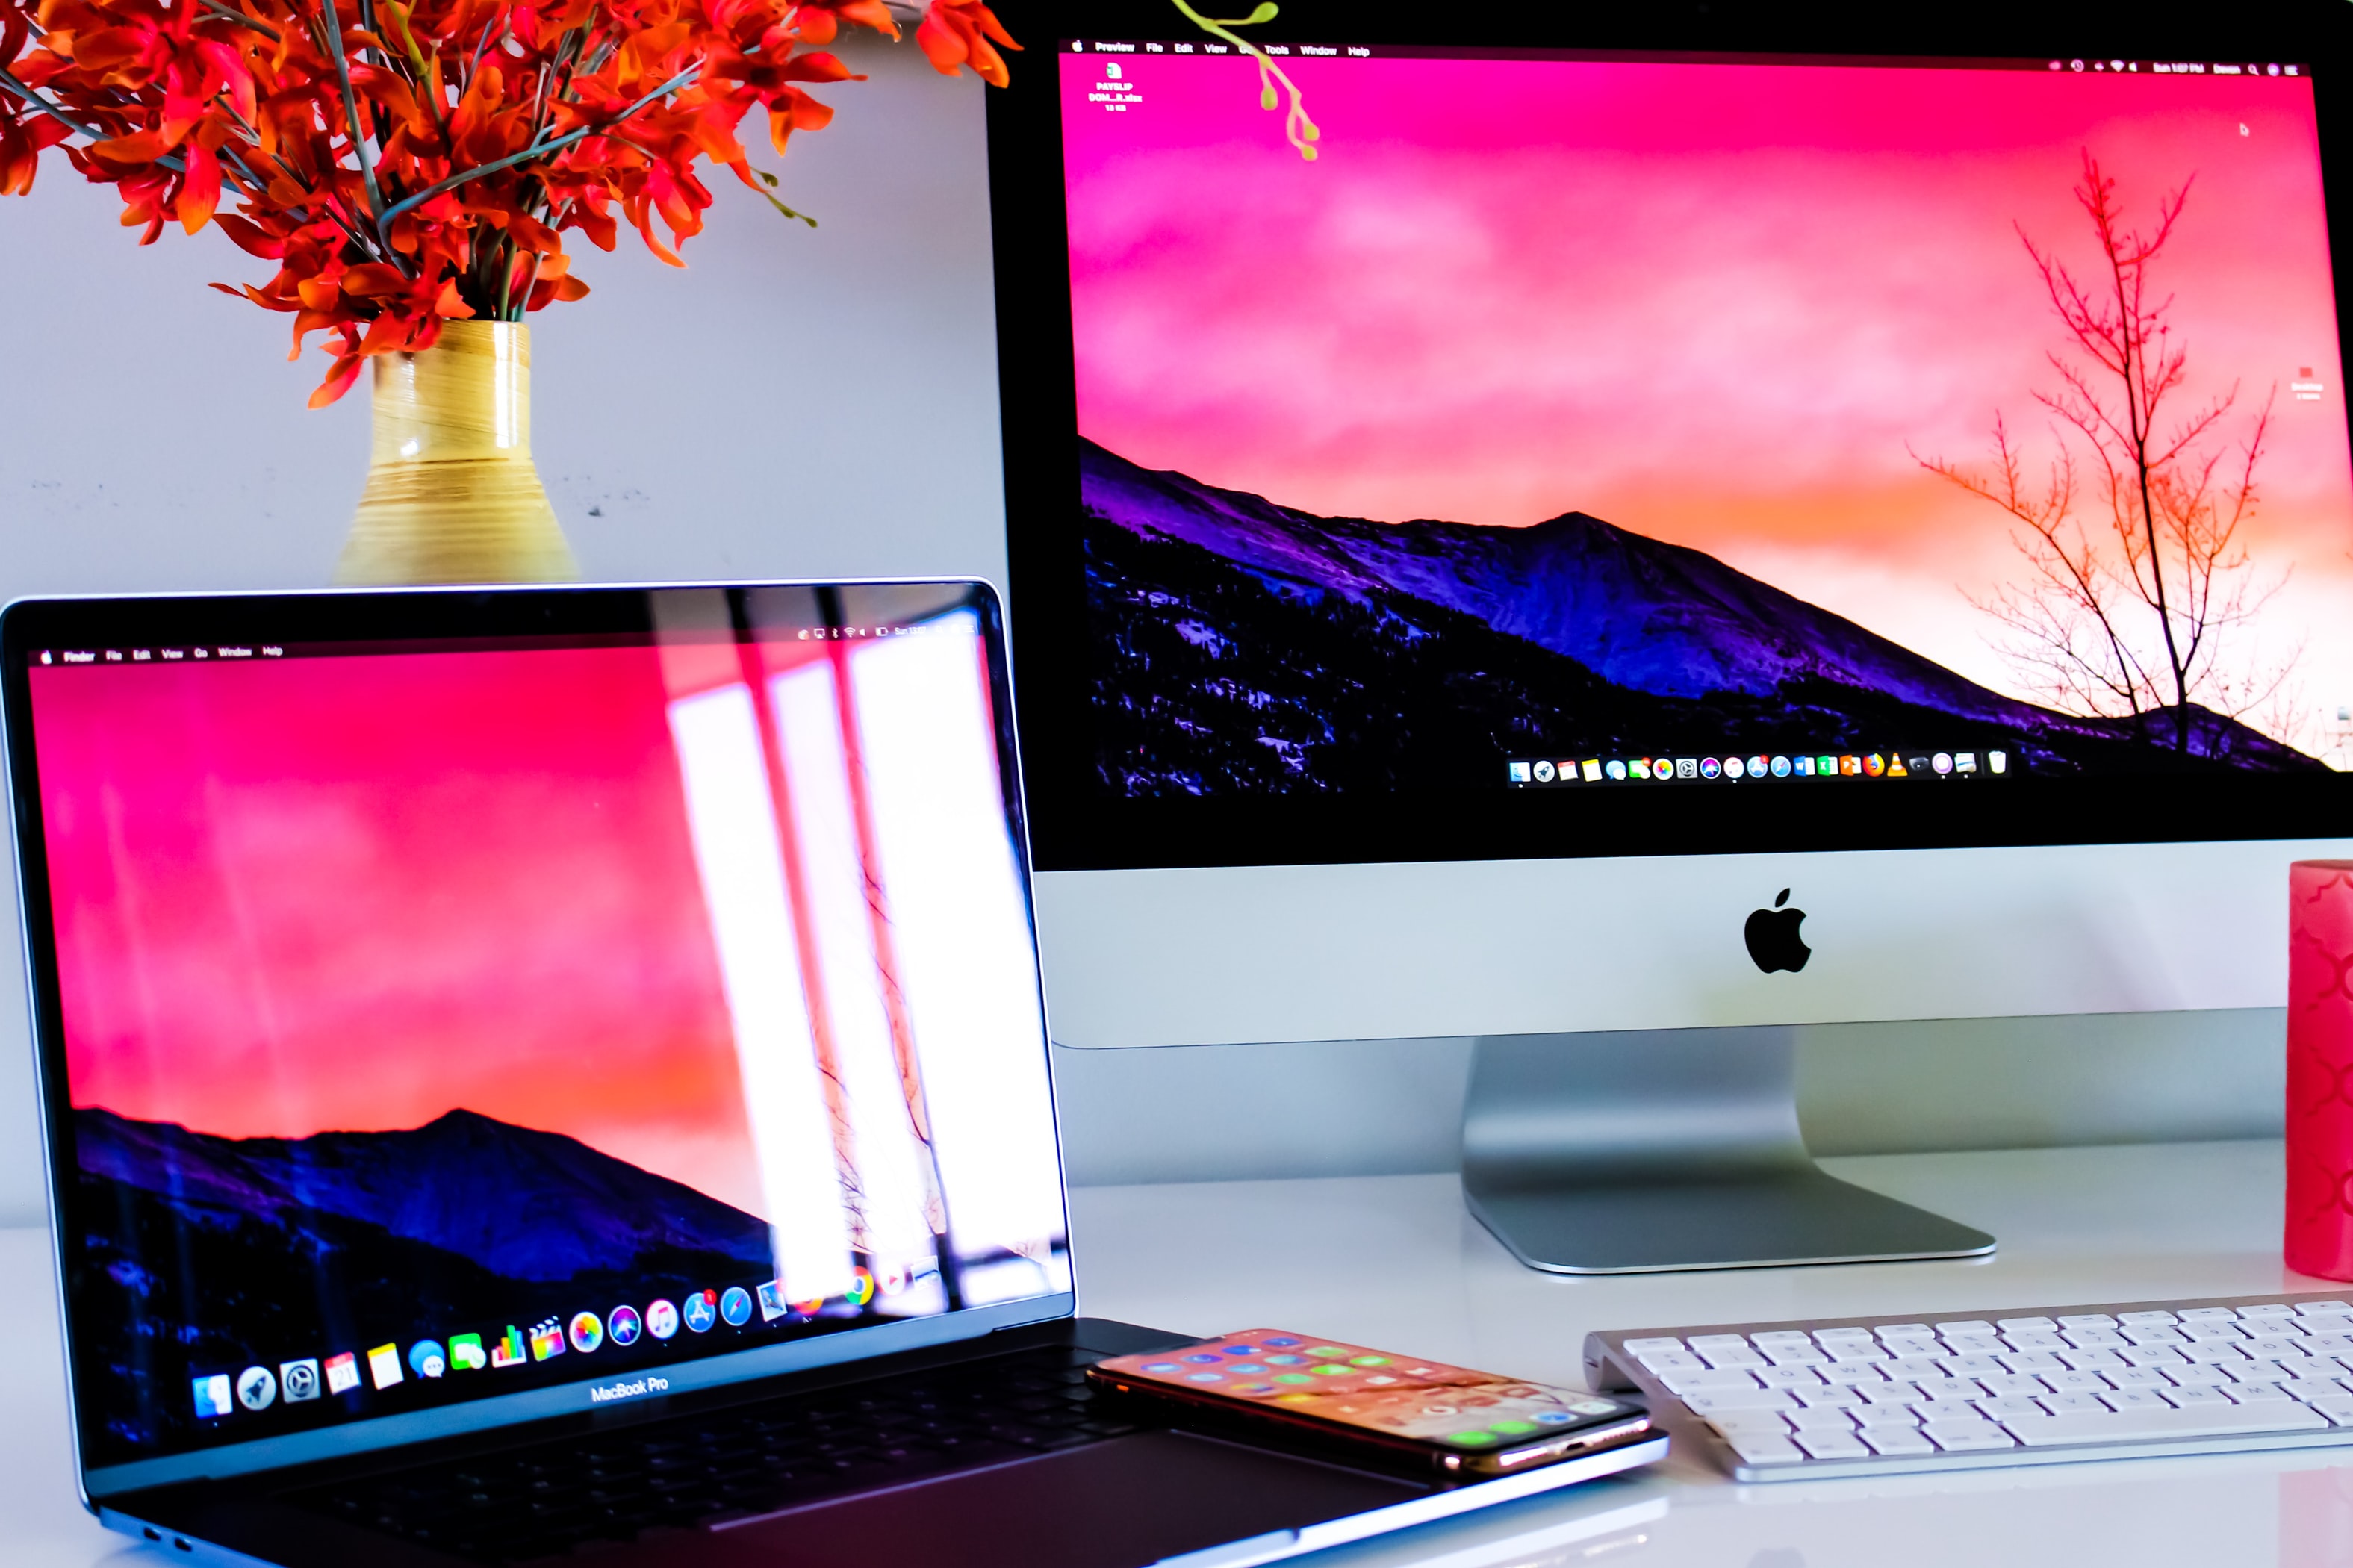 macbook and iMac